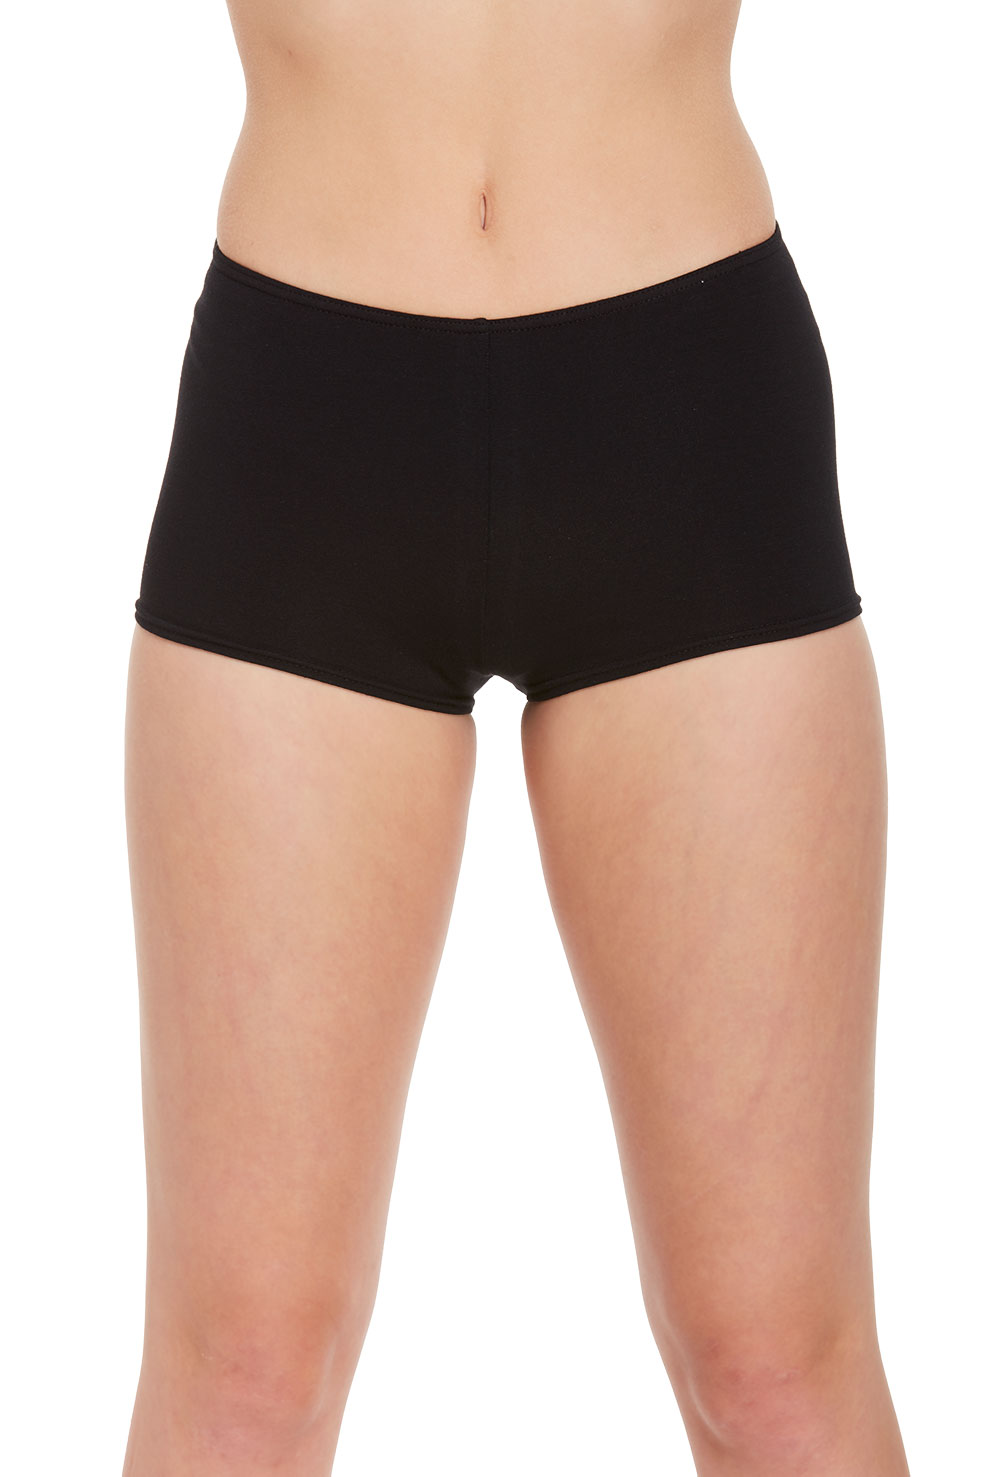 Buy Intermezzo Panbra Hot Pant Shorts - Porselli Dancewear